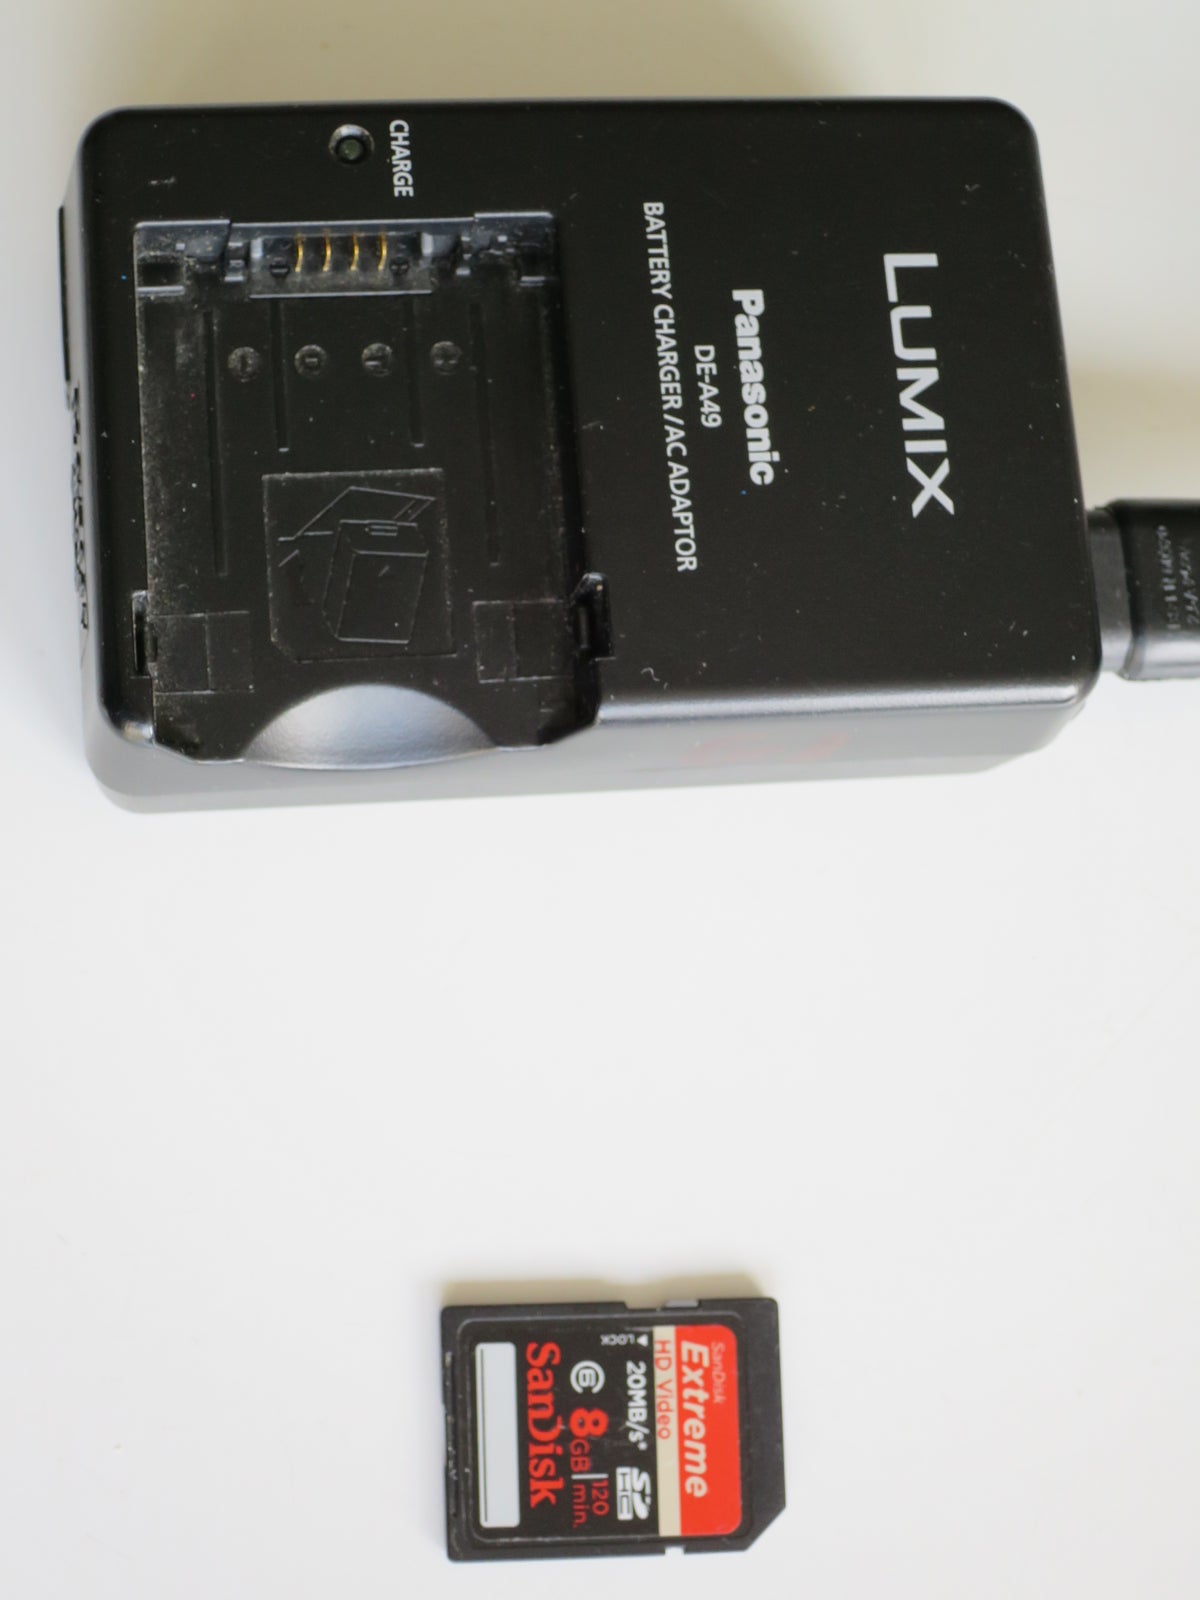 Panasonic, Lumix G10, 12 megapixels